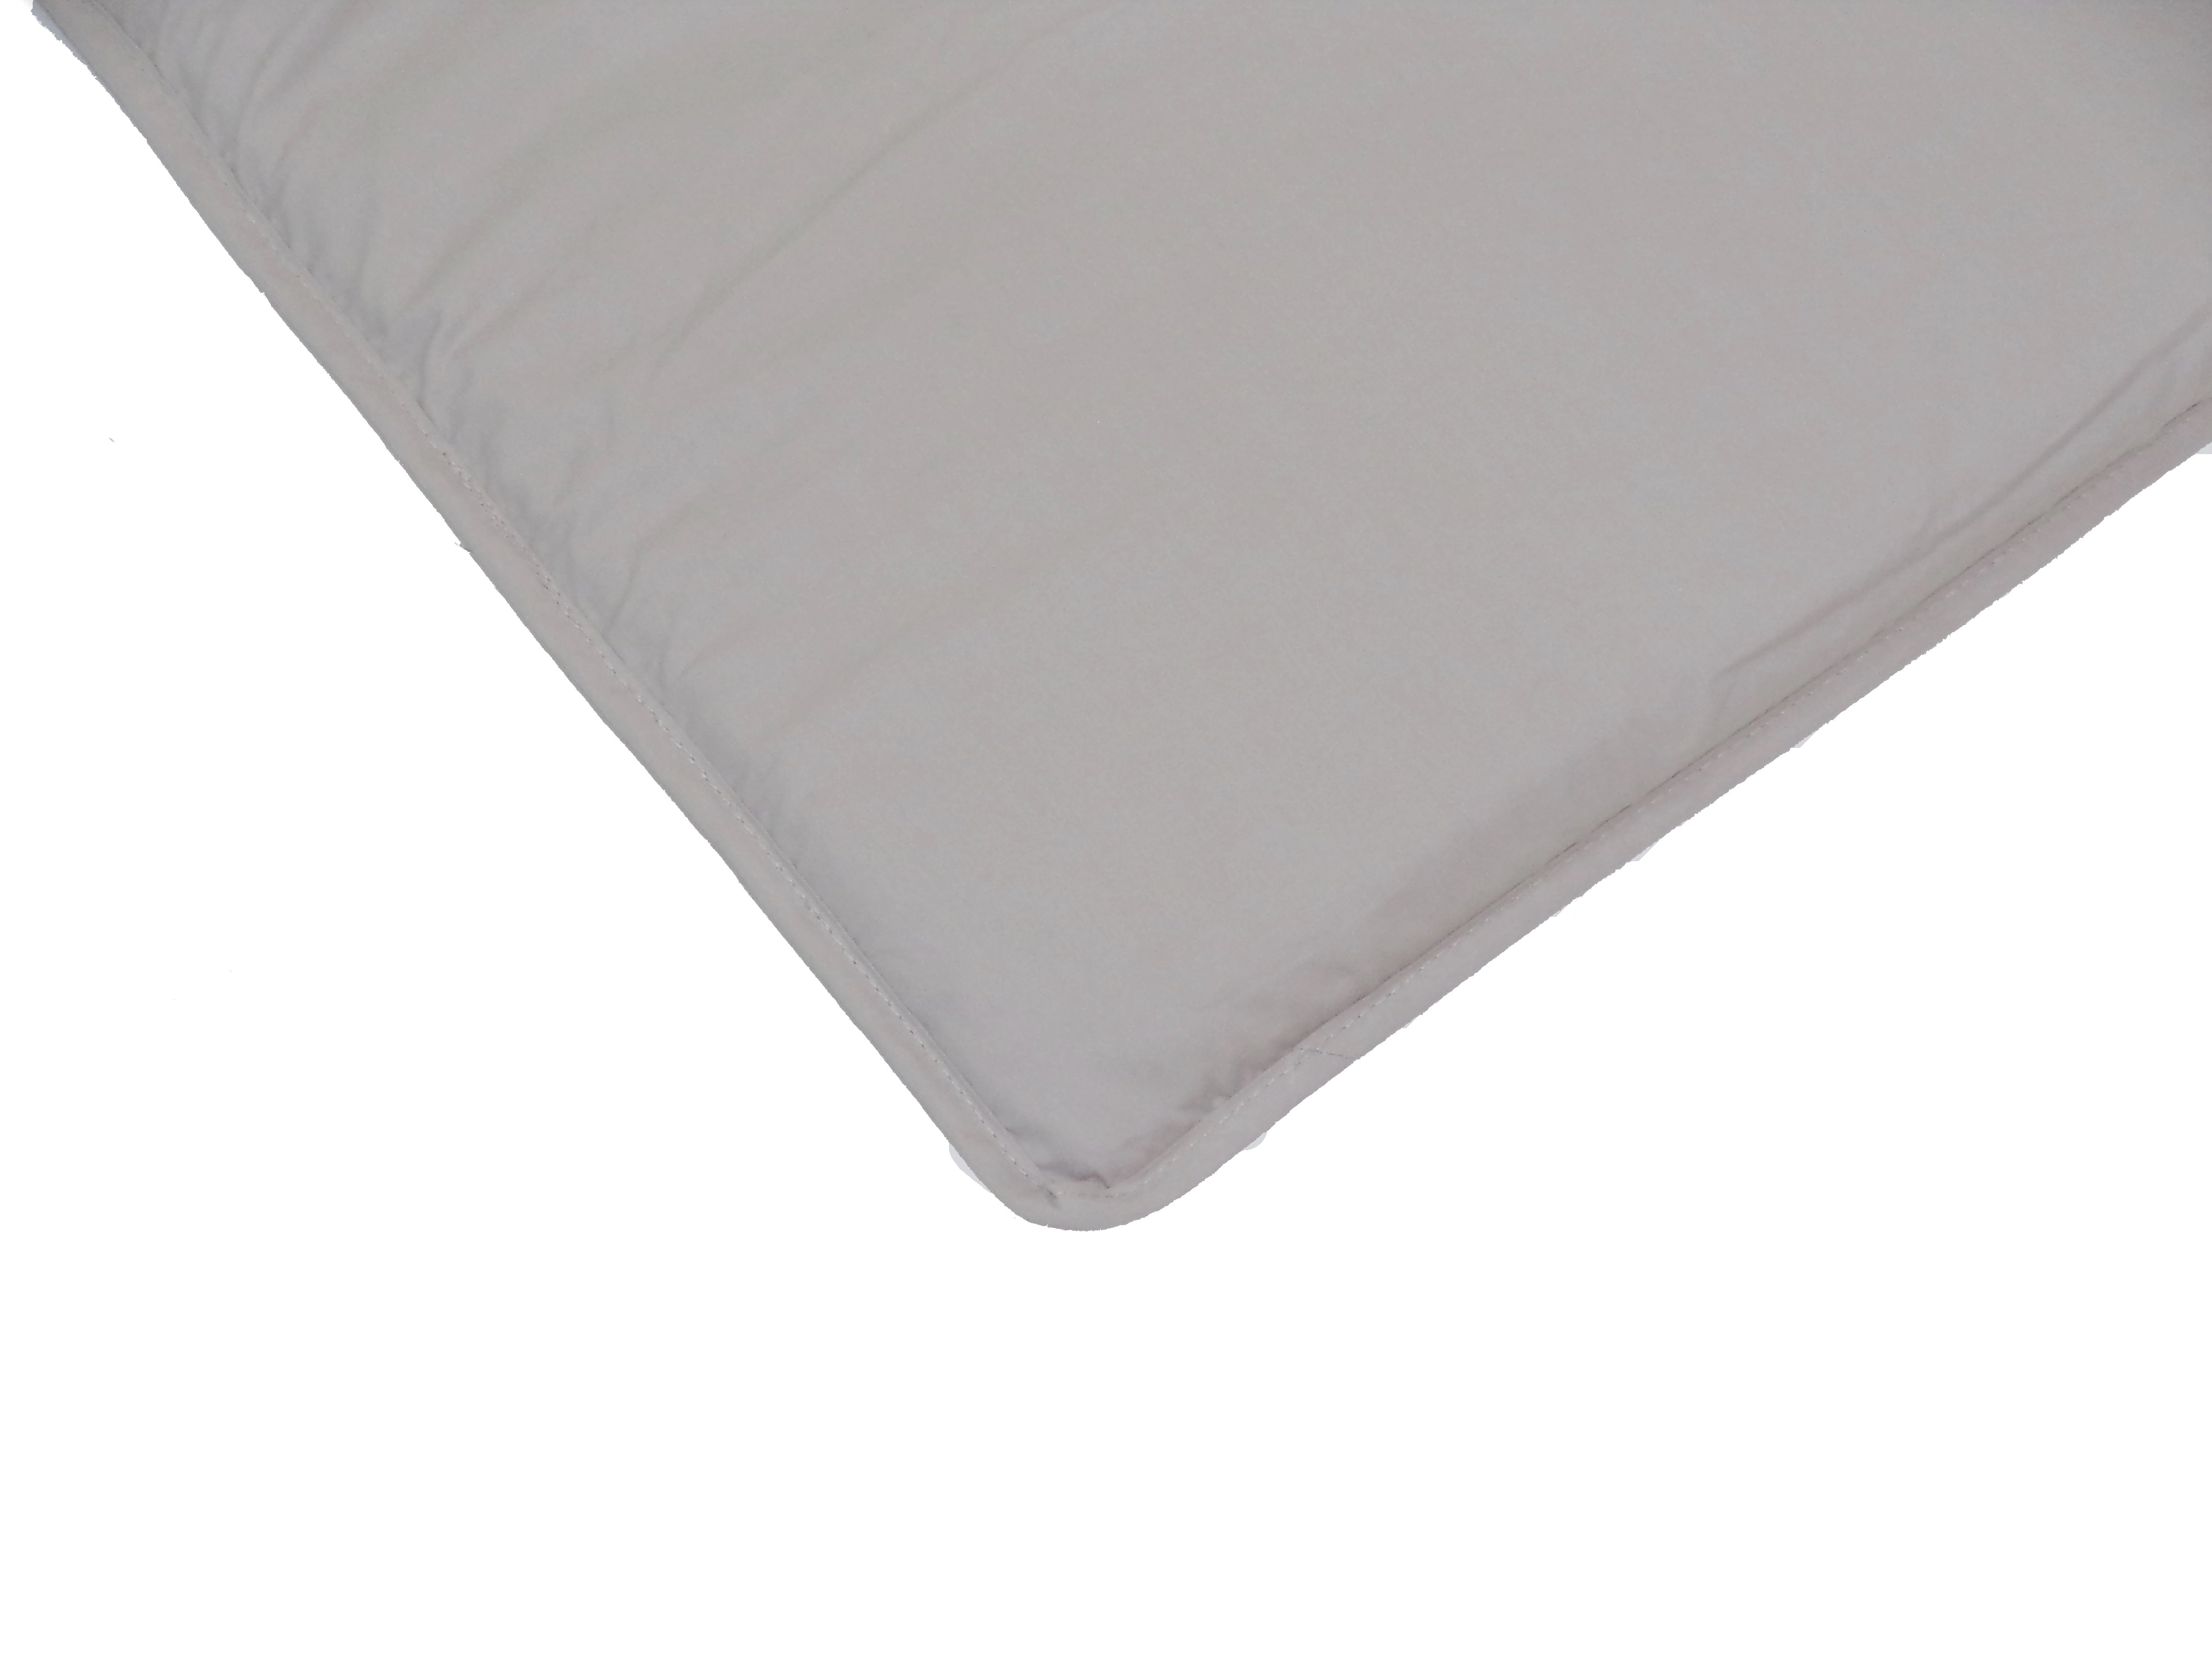 Arm's Reach mini co-sleeper cotton sheets bassinet